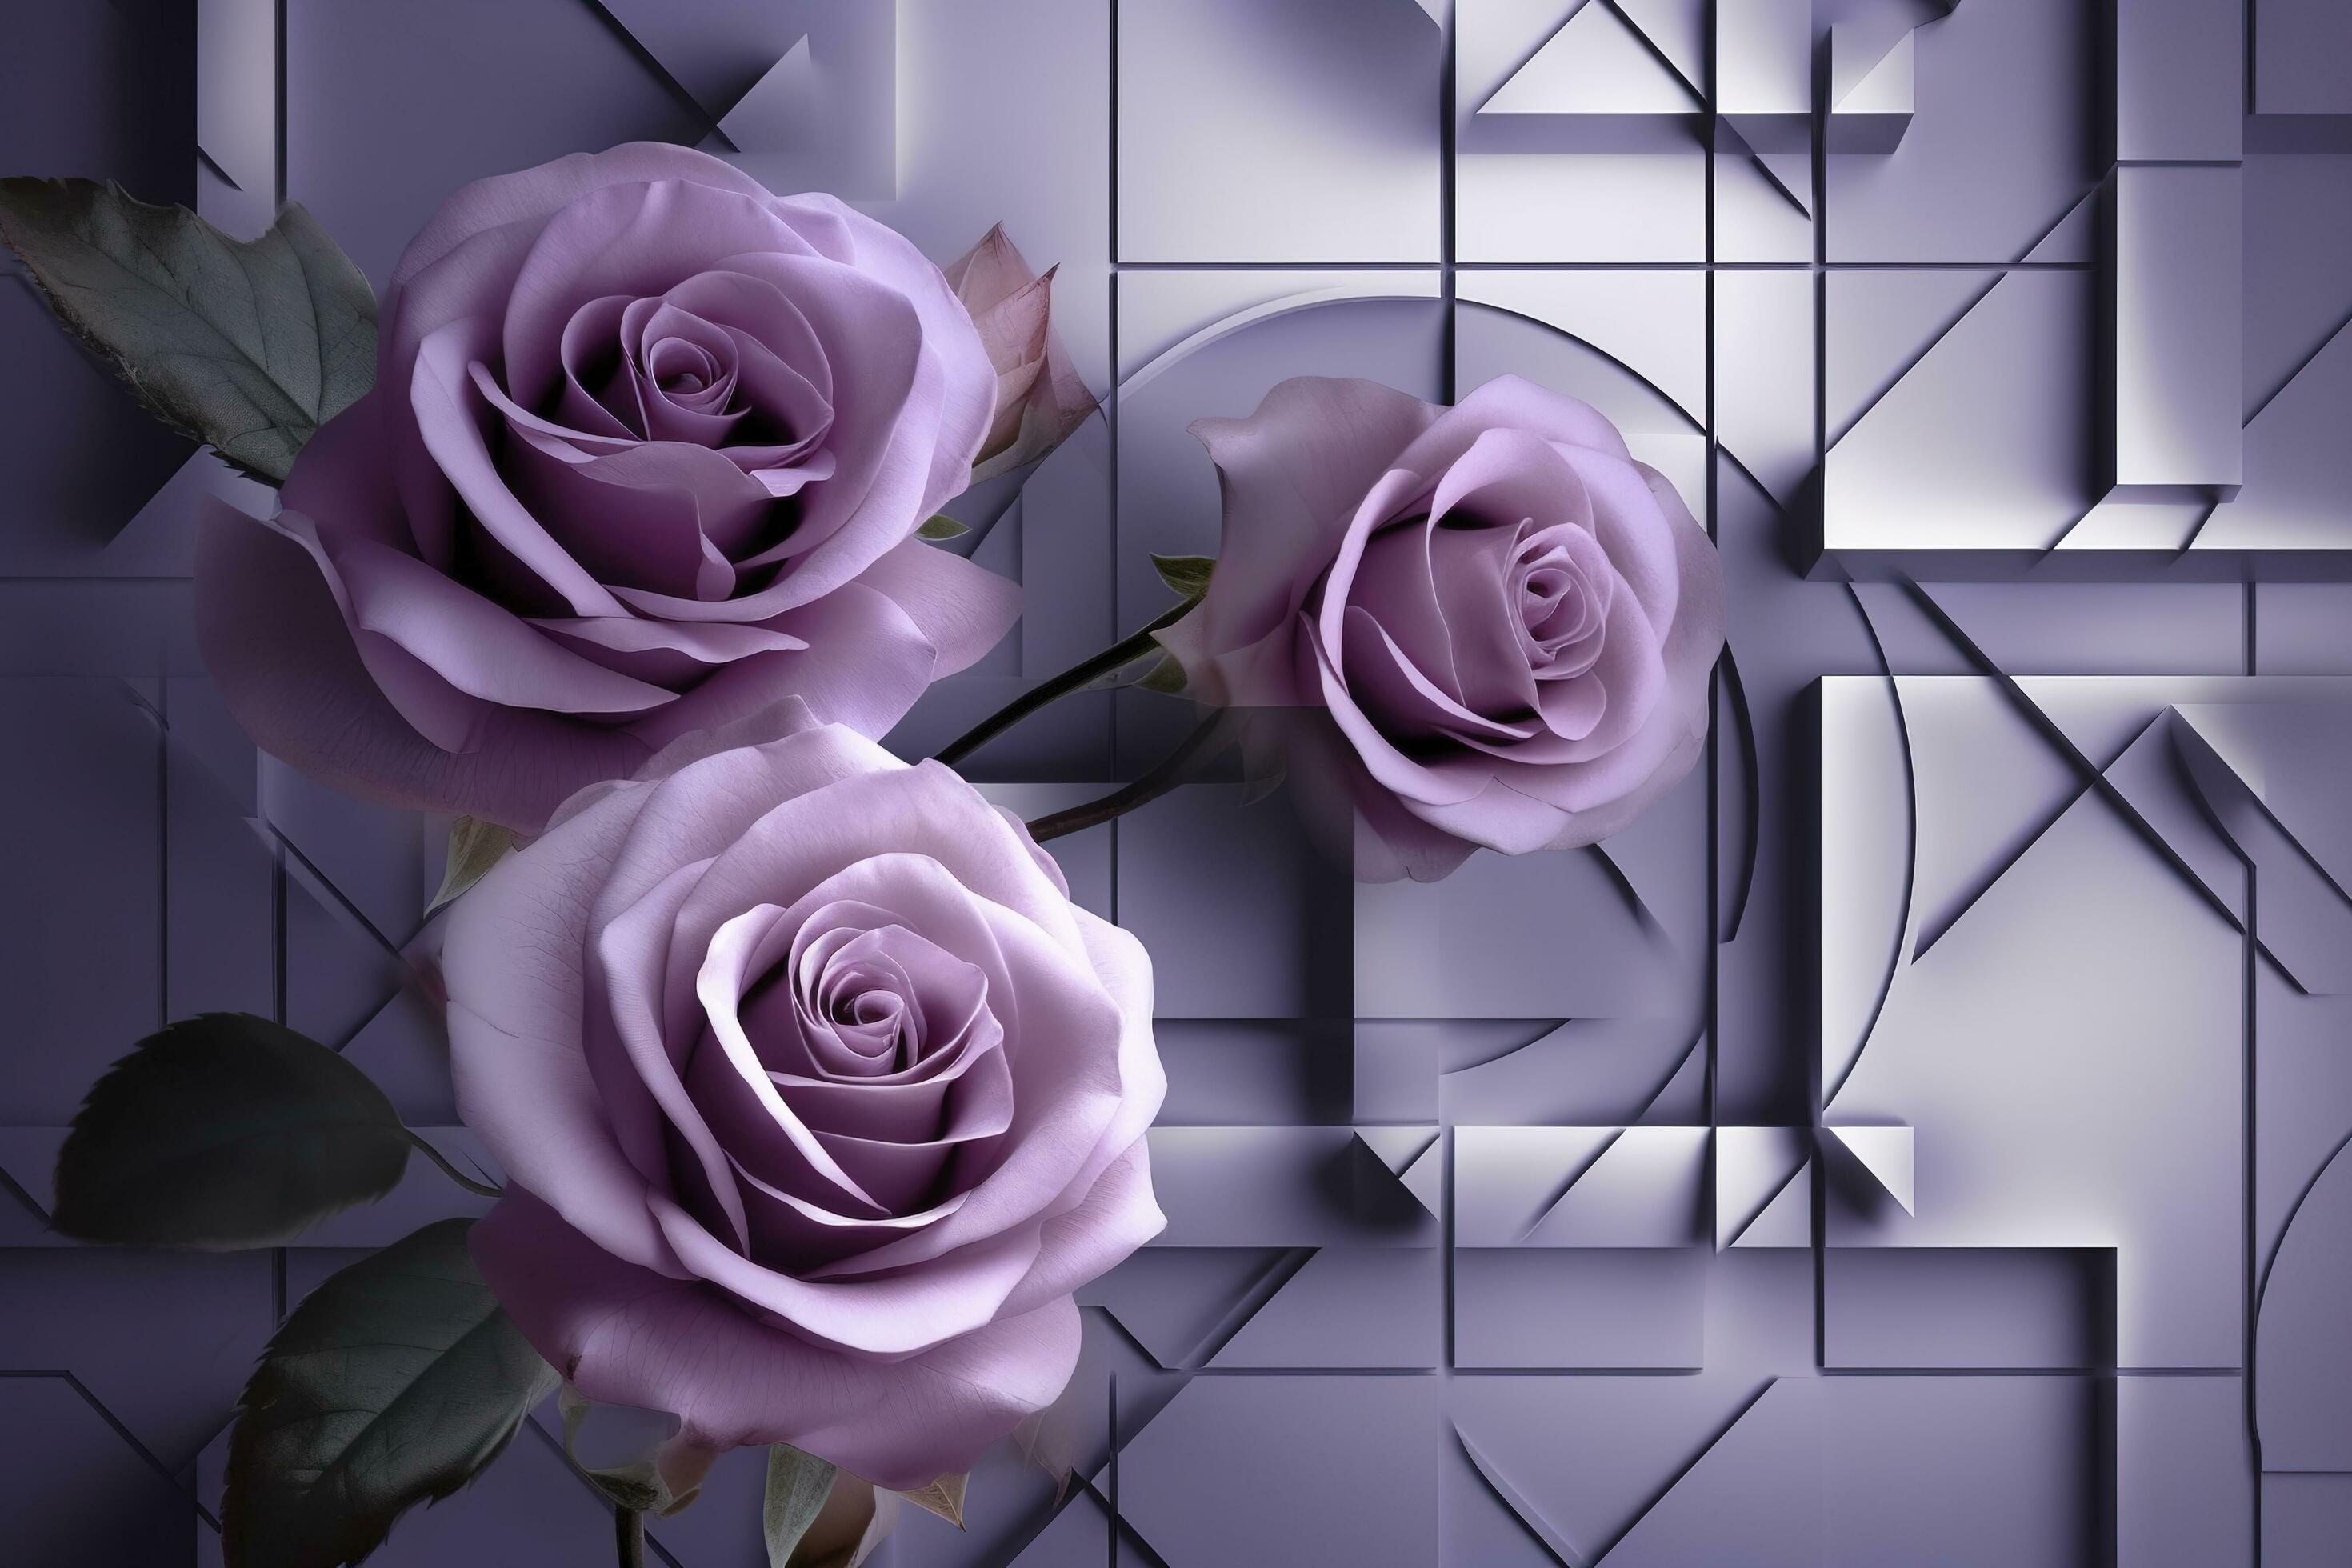 3D abstrato geometria xadrez foto papel de parede, mural colorido,  casamento Roompaper para s, papel 3 D no em rolos